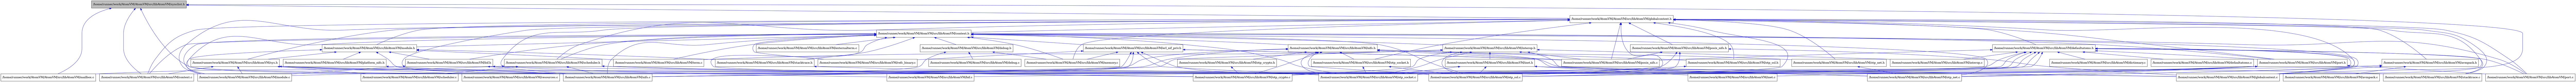 digraph {
    graph [bgcolor="#00000000"]
    node [shape=rectangle style=filled fillcolor="#FFFFFF" font=Helvetica padding=2]
    edge [color="#1414CE"]
    "10" [label="/home/runner/work/AtomVM/AtomVM/src/libAtomVM/bif.c" tooltip="/home/runner/work/AtomVM/AtomVM/src/libAtomVM/bif.c"]
    "46" [label="/home/runner/work/AtomVM/AtomVM/src/libAtomVM/dictionary.c" tooltip="/home/runner/work/AtomVM/AtomVM/src/libAtomVM/dictionary.c"]
    "9" [label="/home/runner/work/AtomVM/AtomVM/src/libAtomVM/bif.h" tooltip="/home/runner/work/AtomVM/AtomVM/src/libAtomVM/bif.h"]
    "31" [label="/home/runner/work/AtomVM/AtomVM/src/libAtomVM/platform_nifs.h" tooltip="/home/runner/work/AtomVM/AtomVM/src/libAtomVM/platform_nifs.h"]
    "19" [label="/home/runner/work/AtomVM/AtomVM/src/libAtomVM/posix_nifs.c" tooltip="/home/runner/work/AtomVM/AtomVM/src/libAtomVM/posix_nifs.c"]
    "47" [label="/home/runner/work/AtomVM/AtomVM/src/libAtomVM/posix_nifs.h" tooltip="/home/runner/work/AtomVM/AtomVM/src/libAtomVM/posix_nifs.h"]
    "45" [label="/home/runner/work/AtomVM/AtomVM/src/libAtomVM/defaultatoms.c" tooltip="/home/runner/work/AtomVM/AtomVM/src/libAtomVM/defaultatoms.c"]
    "1" [label="/home/runner/work/AtomVM/AtomVM/src/libAtomVM/synclist.h" tooltip="/home/runner/work/AtomVM/AtomVM/src/libAtomVM/synclist.h" fillcolor="#BFBFBF"]
    "44" [label="/home/runner/work/AtomVM/AtomVM/src/libAtomVM/defaultatoms.h" tooltip="/home/runner/work/AtomVM/AtomVM/src/libAtomVM/defaultatoms.h"]
    "25" [label="/home/runner/work/AtomVM/AtomVM/src/libAtomVM/inet.c" tooltip="/home/runner/work/AtomVM/AtomVM/src/libAtomVM/inet.c"]
    "24" [label="/home/runner/work/AtomVM/AtomVM/src/libAtomVM/inet.h" tooltip="/home/runner/work/AtomVM/AtomVM/src/libAtomVM/inet.h"]
    "15" [label="/home/runner/work/AtomVM/AtomVM/src/libAtomVM/scheduler.c" tooltip="/home/runner/work/AtomVM/AtomVM/src/libAtomVM/scheduler.c"]
    "42" [label="/home/runner/work/AtomVM/AtomVM/src/libAtomVM/scheduler.h" tooltip="/home/runner/work/AtomVM/AtomVM/src/libAtomVM/scheduler.h"]
    "2" [label="/home/runner/work/AtomVM/AtomVM/src/libAtomVM/context.c" tooltip="/home/runner/work/AtomVM/AtomVM/src/libAtomVM/context.c"]
    "8" [label="/home/runner/work/AtomVM/AtomVM/src/libAtomVM/context.h" tooltip="/home/runner/work/AtomVM/AtomVM/src/libAtomVM/context.h"]
    "40" [label="/home/runner/work/AtomVM/AtomVM/src/libAtomVM/port.c" tooltip="/home/runner/work/AtomVM/AtomVM/src/libAtomVM/port.c"]
    "41" [label="/home/runner/work/AtomVM/AtomVM/src/libAtomVM/port.h" tooltip="/home/runner/work/AtomVM/AtomVM/src/libAtomVM/port.h"]
    "33" [label="/home/runner/work/AtomVM/AtomVM/src/libAtomVM/stacktrace.c" tooltip="/home/runner/work/AtomVM/AtomVM/src/libAtomVM/stacktrace.c"]
    "32" [label="/home/runner/work/AtomVM/AtomVM/src/libAtomVM/stacktrace.h" tooltip="/home/runner/work/AtomVM/AtomVM/src/libAtomVM/stacktrace.h"]
    "20" [label="/home/runner/work/AtomVM/AtomVM/src/libAtomVM/refc_binary.c" tooltip="/home/runner/work/AtomVM/AtomVM/src/libAtomVM/refc_binary.c"]
    "43" [label="/home/runner/work/AtomVM/AtomVM/src/libAtomVM/mailbox.c" tooltip="/home/runner/work/AtomVM/AtomVM/src/libAtomVM/mailbox.c"]
    "11" [label="/home/runner/work/AtomVM/AtomVM/src/libAtomVM/module.c" tooltip="/home/runner/work/AtomVM/AtomVM/src/libAtomVM/module.c"]
    "30" [label="/home/runner/work/AtomVM/AtomVM/src/libAtomVM/module.h" tooltip="/home/runner/work/AtomVM/AtomVM/src/libAtomVM/module.h"]
    "6" [label="/home/runner/work/AtomVM/AtomVM/src/libAtomVM/avmpack.c" tooltip="/home/runner/work/AtomVM/AtomVM/src/libAtomVM/avmpack.c"]
    "5" [label="/home/runner/work/AtomVM/AtomVM/src/libAtomVM/avmpack.h" tooltip="/home/runner/work/AtomVM/AtomVM/src/libAtomVM/avmpack.h"]
    "29" [label="/home/runner/work/AtomVM/AtomVM/src/libAtomVM/term.c" tooltip="/home/runner/work/AtomVM/AtomVM/src/libAtomVM/term.c"]
    "27" [label="/home/runner/work/AtomVM/AtomVM/src/libAtomVM/interop.c" tooltip="/home/runner/work/AtomVM/AtomVM/src/libAtomVM/interop.c"]
    "18" [label="/home/runner/work/AtomVM/AtomVM/src/libAtomVM/otp_ssl.c" tooltip="/home/runner/work/AtomVM/AtomVM/src/libAtomVM/otp_ssl.c"]
    "23" [label="/home/runner/work/AtomVM/AtomVM/src/libAtomVM/interop.h" tooltip="/home/runner/work/AtomVM/AtomVM/src/libAtomVM/interop.h"]
    "39" [label="/home/runner/work/AtomVM/AtomVM/src/libAtomVM/otp_ssl.h" tooltip="/home/runner/work/AtomVM/AtomVM/src/libAtomVM/otp_ssl.h"]
    "21" [label="/home/runner/work/AtomVM/AtomVM/src/libAtomVM/resources.c" tooltip="/home/runner/work/AtomVM/AtomVM/src/libAtomVM/resources.c"]
    "28" [label="/home/runner/work/AtomVM/AtomVM/src/libAtomVM/otp_crypto.c" tooltip="/home/runner/work/AtomVM/AtomVM/src/libAtomVM/otp_crypto.c"]
    "36" [label="/home/runner/work/AtomVM/AtomVM/src/libAtomVM/otp_crypto.h" tooltip="/home/runner/work/AtomVM/AtomVM/src/libAtomVM/otp_crypto.h"]
    "26" [label="/home/runner/work/AtomVM/AtomVM/src/libAtomVM/otp_net.c" tooltip="/home/runner/work/AtomVM/AtomVM/src/libAtomVM/otp_net.c"]
    "37" [label="/home/runner/work/AtomVM/AtomVM/src/libAtomVM/otp_net.h" tooltip="/home/runner/work/AtomVM/AtomVM/src/libAtomVM/otp_net.h"]
    "16" [label="/home/runner/work/AtomVM/AtomVM/src/libAtomVM/erl_nif_priv.h" tooltip="/home/runner/work/AtomVM/AtomVM/src/libAtomVM/erl_nif_priv.h"]
    "34" [label="/home/runner/work/AtomVM/AtomVM/src/libAtomVM/sys.h" tooltip="/home/runner/work/AtomVM/AtomVM/src/libAtomVM/sys.h"]
    "7" [label="/home/runner/work/AtomVM/AtomVM/src/libAtomVM/nifs.c" tooltip="/home/runner/work/AtomVM/AtomVM/src/libAtomVM/nifs.c"]
    "35" [label="/home/runner/work/AtomVM/AtomVM/src/libAtomVM/nifs.h" tooltip="/home/runner/work/AtomVM/AtomVM/src/libAtomVM/nifs.h"]
    "13" [label="/home/runner/work/AtomVM/AtomVM/src/libAtomVM/debug.c" tooltip="/home/runner/work/AtomVM/AtomVM/src/libAtomVM/debug.c"]
    "12" [label="/home/runner/work/AtomVM/AtomVM/src/libAtomVM/debug.h" tooltip="/home/runner/work/AtomVM/AtomVM/src/libAtomVM/debug.h"]
    "3" [label="/home/runner/work/AtomVM/AtomVM/src/libAtomVM/globalcontext.c" tooltip="/home/runner/work/AtomVM/AtomVM/src/libAtomVM/globalcontext.c"]
    "4" [label="/home/runner/work/AtomVM/AtomVM/src/libAtomVM/globalcontext.h" tooltip="/home/runner/work/AtomVM/AtomVM/src/libAtomVM/globalcontext.h"]
    "14" [label="/home/runner/work/AtomVM/AtomVM/src/libAtomVM/memory.c" tooltip="/home/runner/work/AtomVM/AtomVM/src/libAtomVM/memory.c"]
    "17" [label="/home/runner/work/AtomVM/AtomVM/src/libAtomVM/otp_socket.c" tooltip="/home/runner/work/AtomVM/AtomVM/src/libAtomVM/otp_socket.c"]
    "38" [label="/home/runner/work/AtomVM/AtomVM/src/libAtomVM/otp_socket.h" tooltip="/home/runner/work/AtomVM/AtomVM/src/libAtomVM/otp_socket.h"]
    "22" [label="/home/runner/work/AtomVM/AtomVM/src/libAtomVM/externalterm.c" tooltip="/home/runner/work/AtomVM/AtomVM/src/libAtomVM/externalterm.c"]
    "9" -> "10" [dir=back tooltip="include"]
    "9" -> "11" [dir=back tooltip="include"]
    "9" -> "7" [dir=back tooltip="include"]
    "31" -> "7" [dir=back tooltip="include"]
    "47" -> "3" [dir=back tooltip="include"]
    "47" -> "7" [dir=back tooltip="include"]
    "47" -> "17" [dir=back tooltip="include"]
    "47" -> "19" [dir=back tooltip="include"]
    "1" -> "2" [dir=back tooltip="include"]
    "1" -> "3" [dir=back tooltip="include"]
    "1" -> "4" [dir=back tooltip="include"]
    "1" -> "43" [dir=back tooltip="include"]
    "1" -> "7" [dir=back tooltip="include"]
    "44" -> "10" [dir=back tooltip="include"]
    "44" -> "45" [dir=back tooltip="include"]
    "44" -> "46" [dir=back tooltip="include"]
    "44" -> "3" [dir=back tooltip="include"]
    "44" -> "27" [dir=back tooltip="include"]
    "44" -> "7" [dir=back tooltip="include"]
    "44" -> "28" [dir=back tooltip="include"]
    "44" -> "26" [dir=back tooltip="include"]
    "44" -> "17" [dir=back tooltip="include"]
    "44" -> "18" [dir=back tooltip="include"]
    "44" -> "40" [dir=back tooltip="include"]
    "44" -> "41" [dir=back tooltip="include"]
    "44" -> "19" [dir=back tooltip="include"]
    "44" -> "21" [dir=back tooltip="include"]
    "44" -> "33" [dir=back tooltip="include"]
    "24" -> "25" [dir=back tooltip="include"]
    "24" -> "26" [dir=back tooltip="include"]
    "24" -> "17" [dir=back tooltip="include"]
    "24" -> "18" [dir=back tooltip="include"]
    "42" -> "3" [dir=back tooltip="include"]
    "42" -> "43" [dir=back tooltip="include"]
    "42" -> "7" [dir=back tooltip="include"]
    "42" -> "17" [dir=back tooltip="include"]
    "42" -> "15" [dir=back tooltip="include"]
    "8" -> "9" [dir=back tooltip="include"]
    "8" -> "2" [dir=back tooltip="include"]
    "8" -> "12" [dir=back tooltip="include"]
    "8" -> "16" [dir=back tooltip="include"]
    "8" -> "22" [dir=back tooltip="include"]
    "8" -> "3" [dir=back tooltip="include"]
    "8" -> "23" [dir=back tooltip="include"]
    "8" -> "14" [dir=back tooltip="include"]
    "8" -> "11" [dir=back tooltip="include"]
    "8" -> "30" [dir=back tooltip="include"]
    "8" -> "7" [dir=back tooltip="include"]
    "8" -> "35" [dir=back tooltip="include"]
    "8" -> "28" [dir=back tooltip="include"]
    "8" -> "26" [dir=back tooltip="include"]
    "8" -> "17" [dir=back tooltip="include"]
    "8" -> "18" [dir=back tooltip="include"]
    "8" -> "40" [dir=back tooltip="include"]
    "8" -> "41" [dir=back tooltip="include"]
    "8" -> "20" [dir=back tooltip="include"]
    "8" -> "21" [dir=back tooltip="include"]
    "8" -> "42" [dir=back tooltip="include"]
    "8" -> "32" [dir=back tooltip="include"]
    "8" -> "29" [dir=back tooltip="include"]
    "41" -> "25" [dir=back tooltip="include"]
    "41" -> "7" [dir=back tooltip="include"]
    "41" -> "26" [dir=back tooltip="include"]
    "41" -> "17" [dir=back tooltip="include"]
    "41" -> "18" [dir=back tooltip="include"]
    "41" -> "40" [dir=back tooltip="include"]
    "32" -> "33" [dir=back tooltip="include"]
    "30" -> "9" [dir=back tooltip="include"]
    "30" -> "11" [dir=back tooltip="include"]
    "30" -> "7" [dir=back tooltip="include"]
    "30" -> "31" [dir=back tooltip="include"]
    "30" -> "32" [dir=back tooltip="include"]
    "30" -> "34" [dir=back tooltip="include"]
    "30" -> "29" [dir=back tooltip="include"]
    "5" -> "6" [dir=back tooltip="include"]
    "5" -> "3" [dir=back tooltip="include"]
    "5" -> "7" [dir=back tooltip="include"]
    "23" -> "24" [dir=back tooltip="include"]
    "23" -> "27" [dir=back tooltip="include"]
    "23" -> "7" [dir=back tooltip="include"]
    "23" -> "28" [dir=back tooltip="include"]
    "23" -> "26" [dir=back tooltip="include"]
    "23" -> "17" [dir=back tooltip="include"]
    "23" -> "18" [dir=back tooltip="include"]
    "23" -> "19" [dir=back tooltip="include"]
    "23" -> "29" [dir=back tooltip="include"]
    "39" -> "18" [dir=back tooltip="include"]
    "36" -> "28" [dir=back tooltip="include"]
    "37" -> "26" [dir=back tooltip="include"]
    "16" -> "2" [dir=back tooltip="include"]
    "16" -> "3" [dir=back tooltip="include"]
    "16" -> "14" [dir=back tooltip="include"]
    "16" -> "17" [dir=back tooltip="include"]
    "16" -> "18" [dir=back tooltip="include"]
    "16" -> "19" [dir=back tooltip="include"]
    "16" -> "20" [dir=back tooltip="include"]
    "16" -> "21" [dir=back tooltip="include"]
    "34" -> "2" [dir=back tooltip="include"]
    "34" -> "3" [dir=back tooltip="include"]
    "34" -> "11" [dir=back tooltip="include"]
    "34" -> "7" [dir=back tooltip="include"]
    "34" -> "17" [dir=back tooltip="include"]
    "34" -> "21" [dir=back tooltip="include"]
    "34" -> "15" [dir=back tooltip="include"]
    "35" -> "11" [dir=back tooltip="include"]
    "35" -> "7" [dir=back tooltip="include"]
    "35" -> "28" [dir=back tooltip="include"]
    "35" -> "36" [dir=back tooltip="include"]
    "35" -> "26" [dir=back tooltip="include"]
    "35" -> "37" [dir=back tooltip="include"]
    "35" -> "17" [dir=back tooltip="include"]
    "35" -> "38" [dir=back tooltip="include"]
    "35" -> "18" [dir=back tooltip="include"]
    "35" -> "39" [dir=back tooltip="include"]
    "35" -> "19" [dir=back tooltip="include"]
    "12" -> "13" [dir=back tooltip="include"]
    "12" -> "14" [dir=back tooltip="include"]
    "12" -> "15" [dir=back tooltip="include"]
    "4" -> "5" [dir=back tooltip="include"]
    "4" -> "2" [dir=back tooltip="include"]
    "4" -> "8" [dir=back tooltip="include"]
    "4" -> "44" [dir=back tooltip="include"]
    "4" -> "3" [dir=back tooltip="include"]
    "4" -> "14" [dir=back tooltip="include"]
    "4" -> "11" [dir=back tooltip="include"]
    "4" -> "30" [dir=back tooltip="include"]
    "4" -> "7" [dir=back tooltip="include"]
    "4" -> "28" [dir=back tooltip="include"]
    "4" -> "26" [dir=back tooltip="include"]
    "4" -> "37" [dir=back tooltip="include"]
    "4" -> "17" [dir=back tooltip="include"]
    "4" -> "38" [dir=back tooltip="include"]
    "4" -> "18" [dir=back tooltip="include"]
    "4" -> "39" [dir=back tooltip="include"]
    "4" -> "40" [dir=back tooltip="include"]
    "4" -> "41" [dir=back tooltip="include"]
    "4" -> "19" [dir=back tooltip="include"]
    "4" -> "47" [dir=back tooltip="include"]
    "4" -> "42" [dir=back tooltip="include"]
    "4" -> "33" [dir=back tooltip="include"]
    "4" -> "34" [dir=back tooltip="include"]
    "38" -> "17" [dir=back tooltip="include"]
    "38" -> "18" [dir=back tooltip="include"]
}